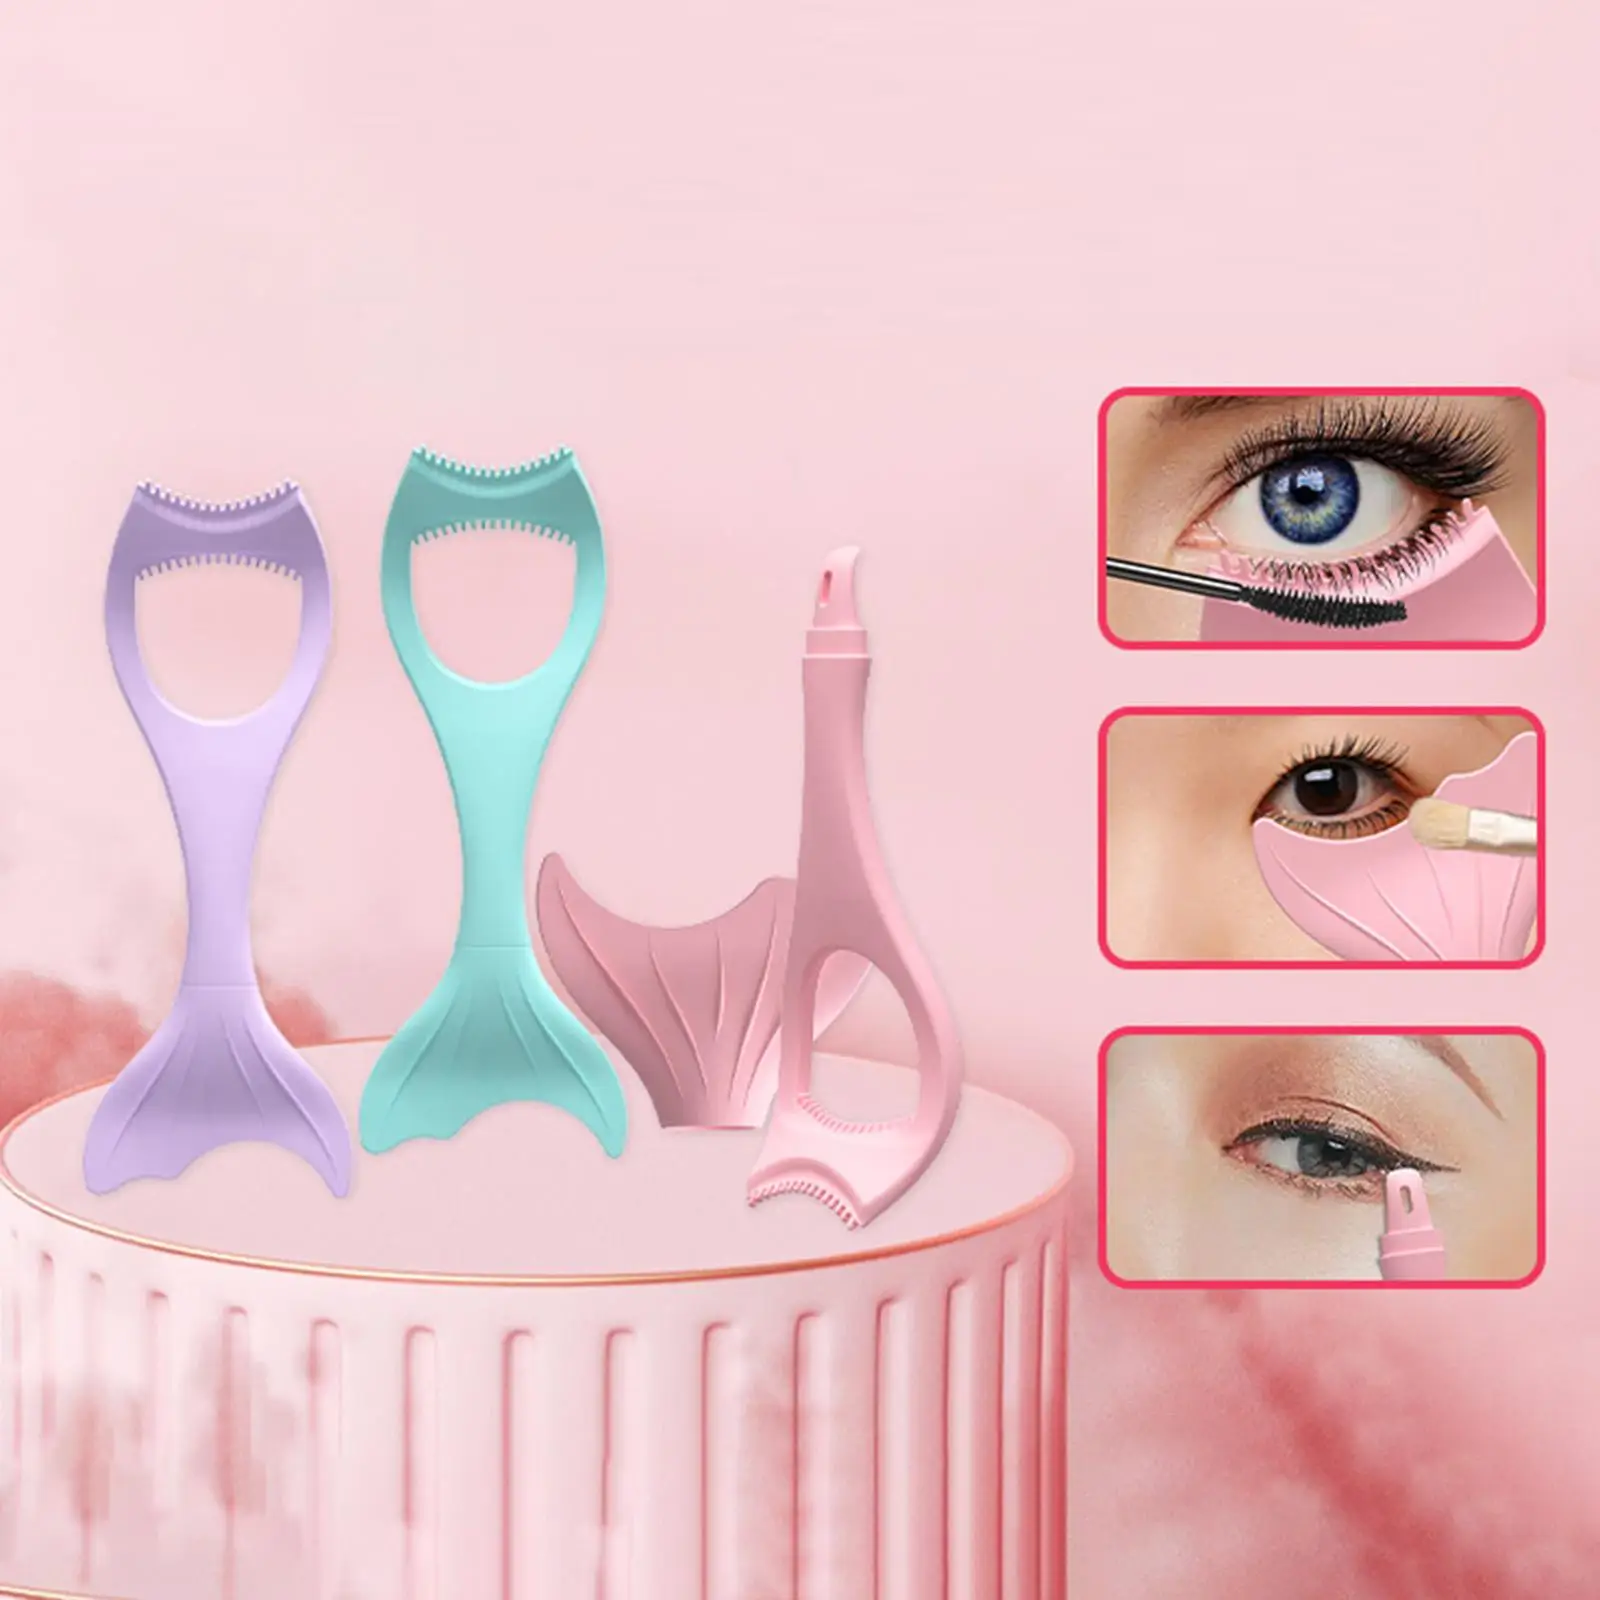 SilicEyeliner Template Guide Stencil, Eye Makeup Tool Guide Tool Eyeliner Assistant Helper for Women Girls Beginners